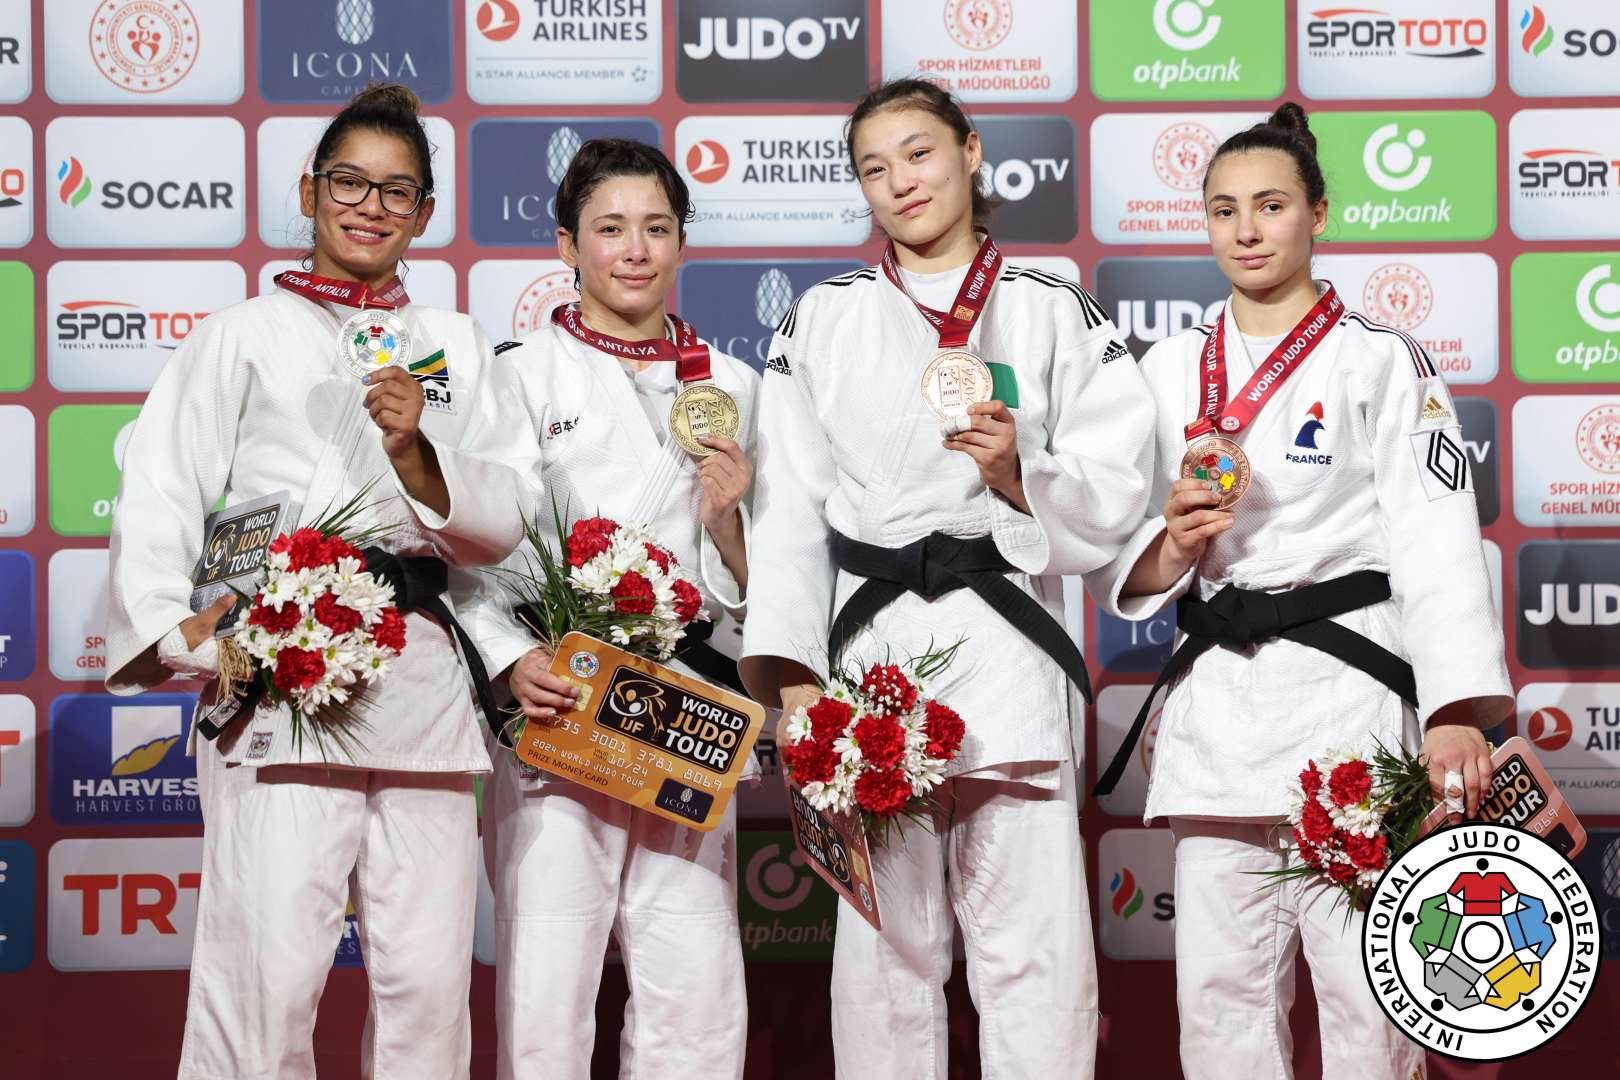 Judoka from Turkmenistan became bronze medalist of the Antalya Grand Slam